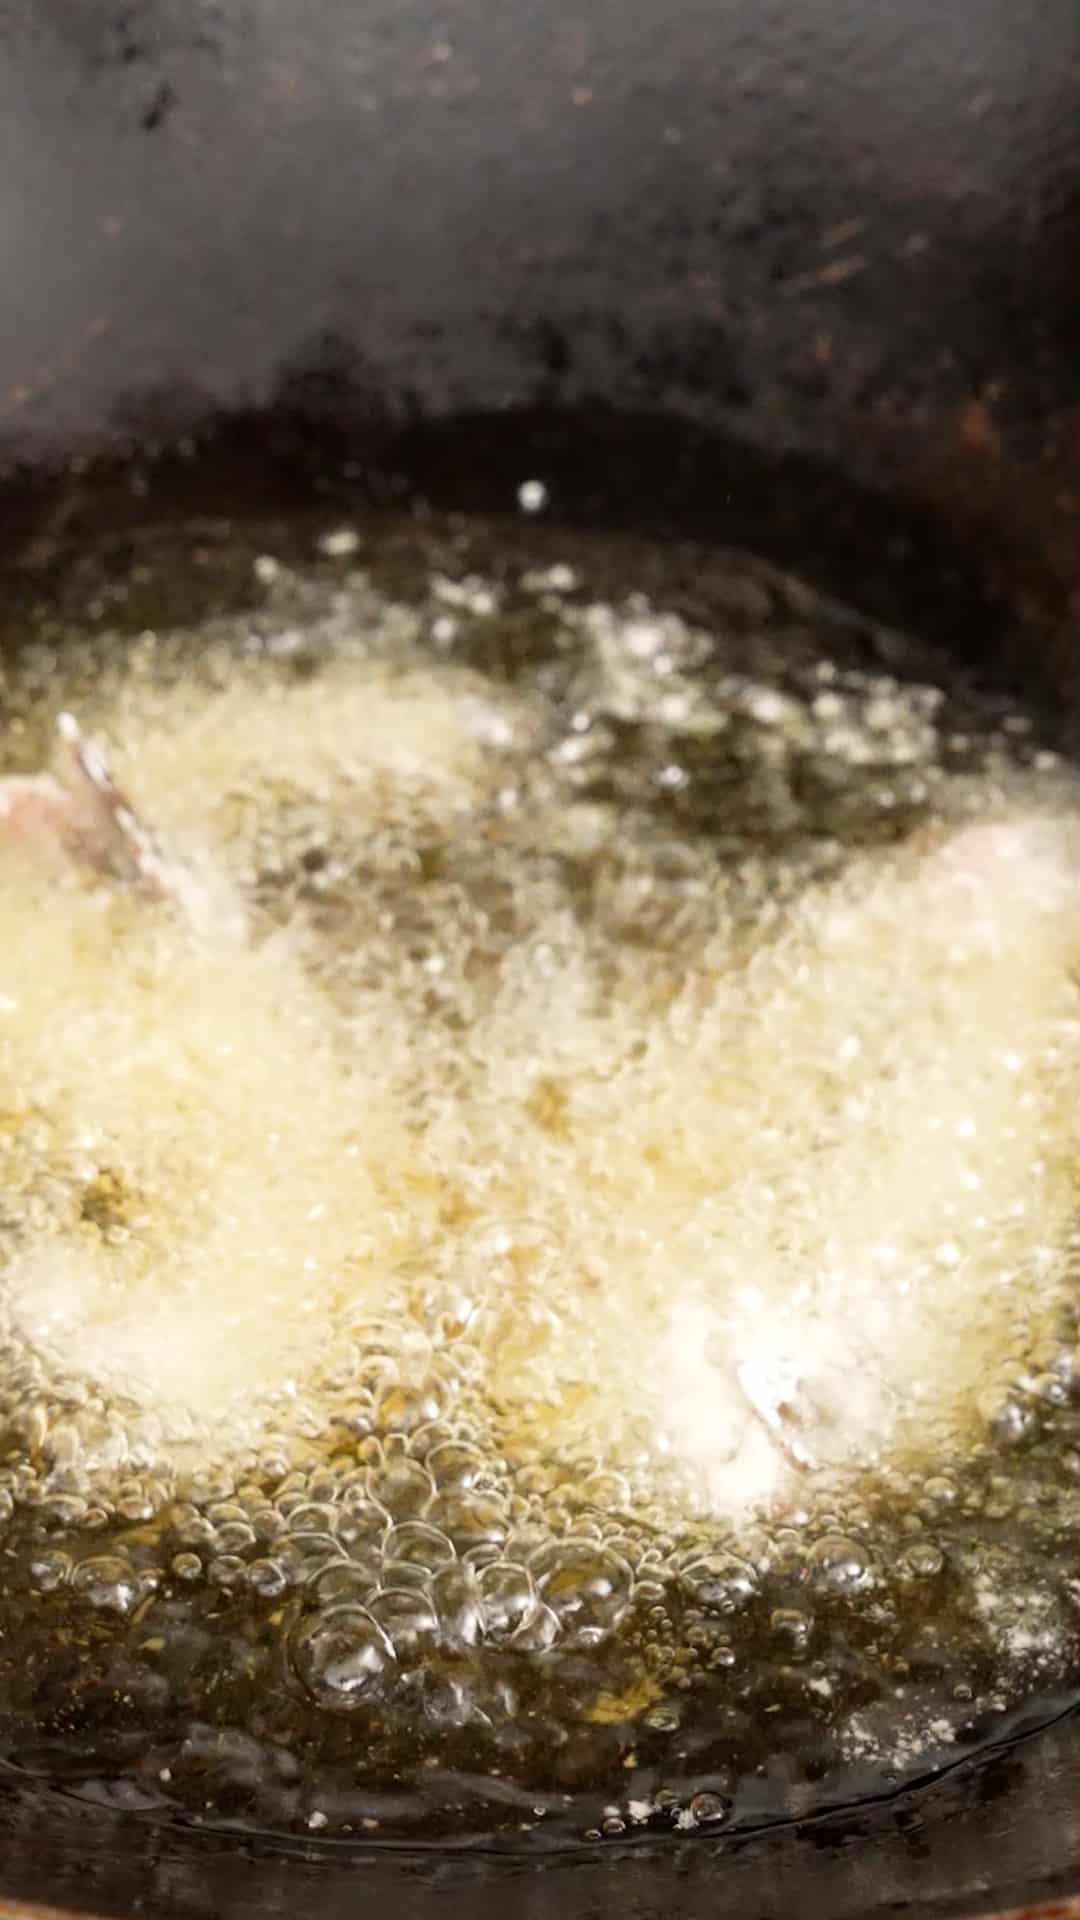 Shrimp frying in a wok.